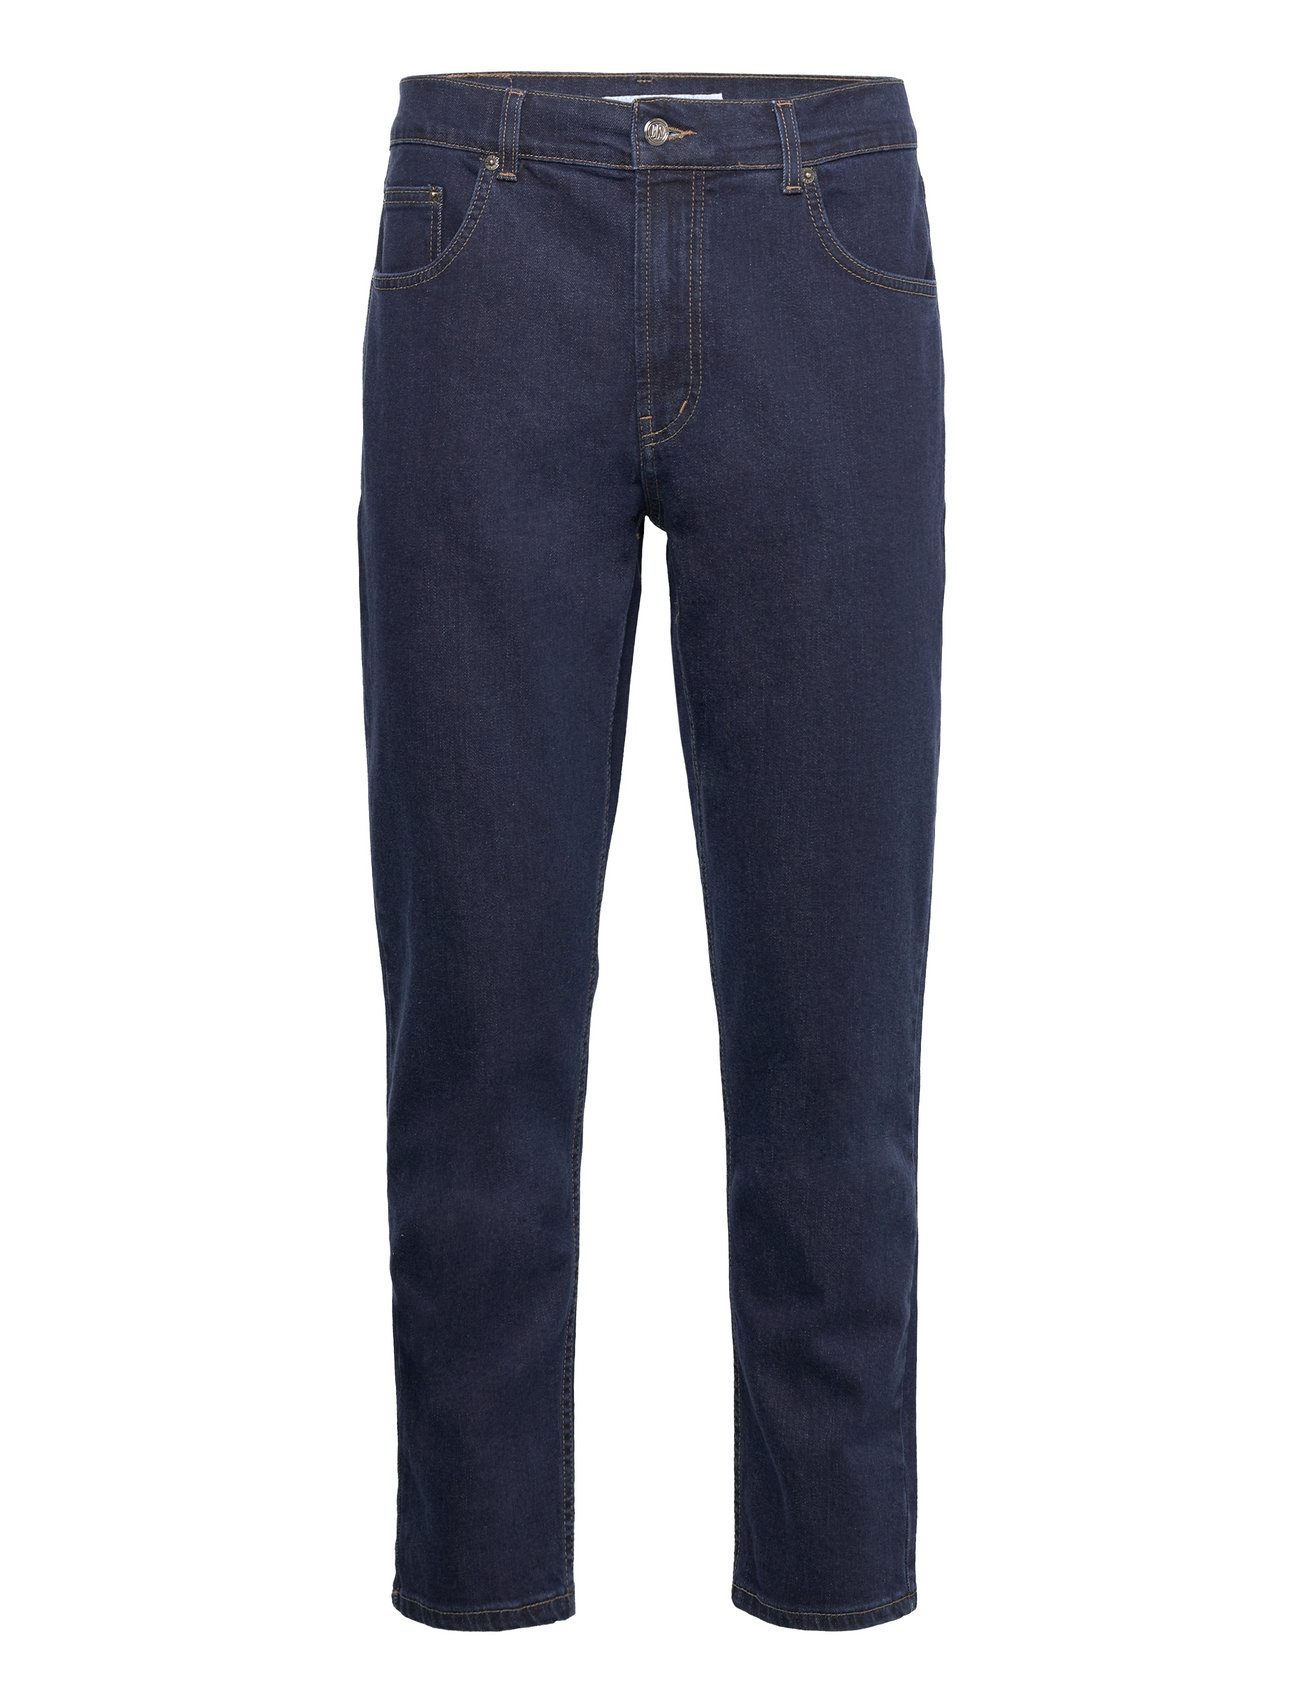 BLS Hafnia Balboa Jeans - Slim jeans - Boozt.com